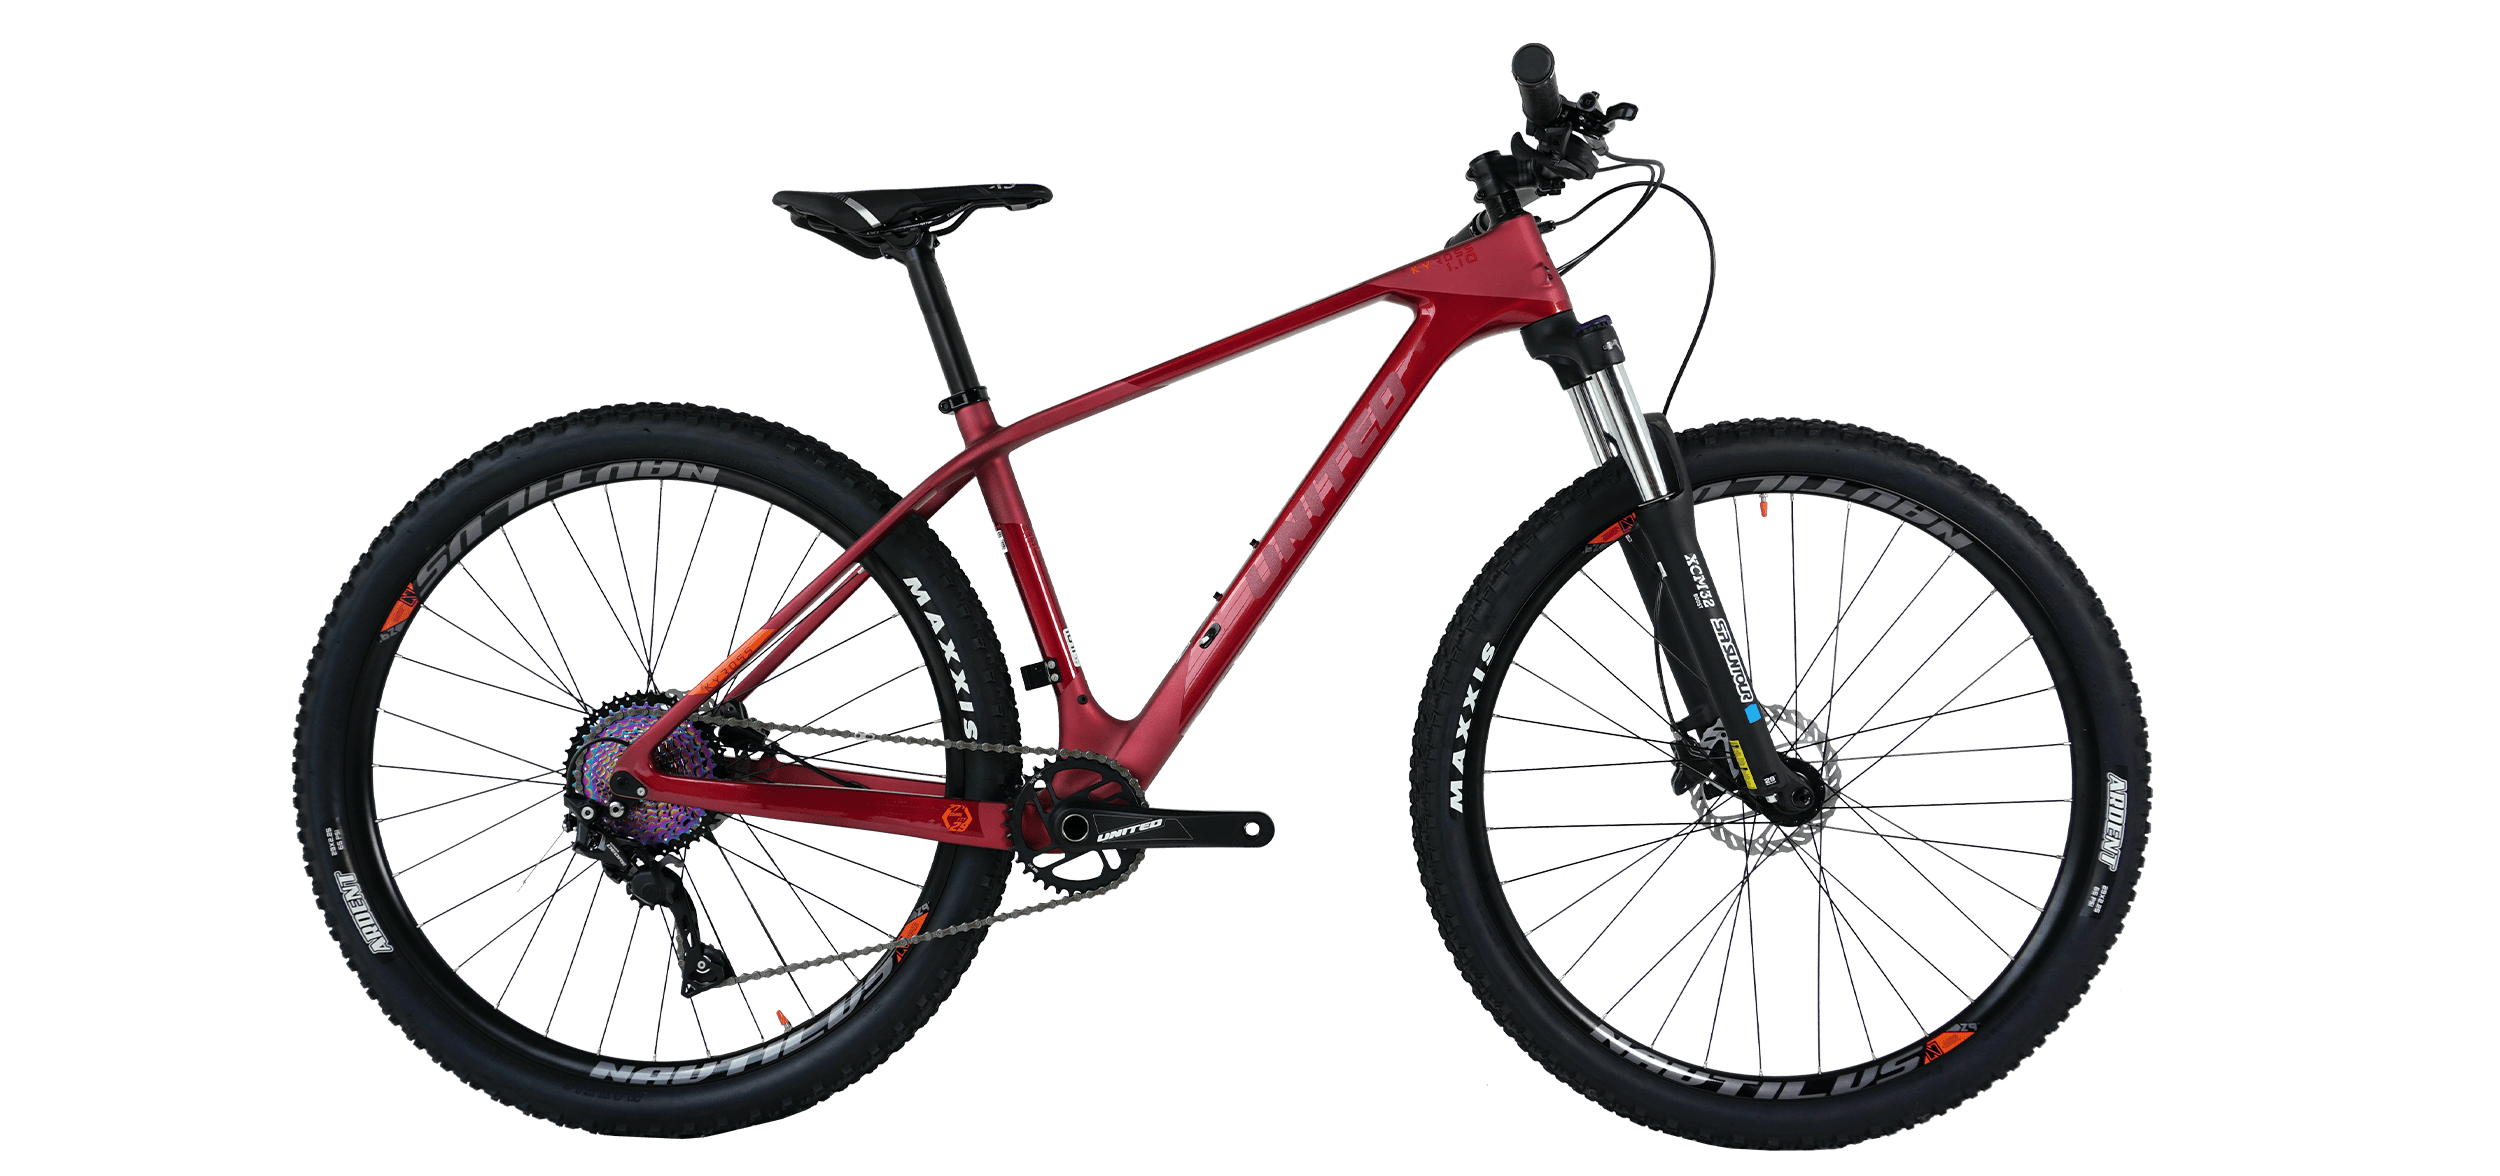 Bicicleta Mountain Bike Kyross 1.1 Aro 29 Rígida Rojo